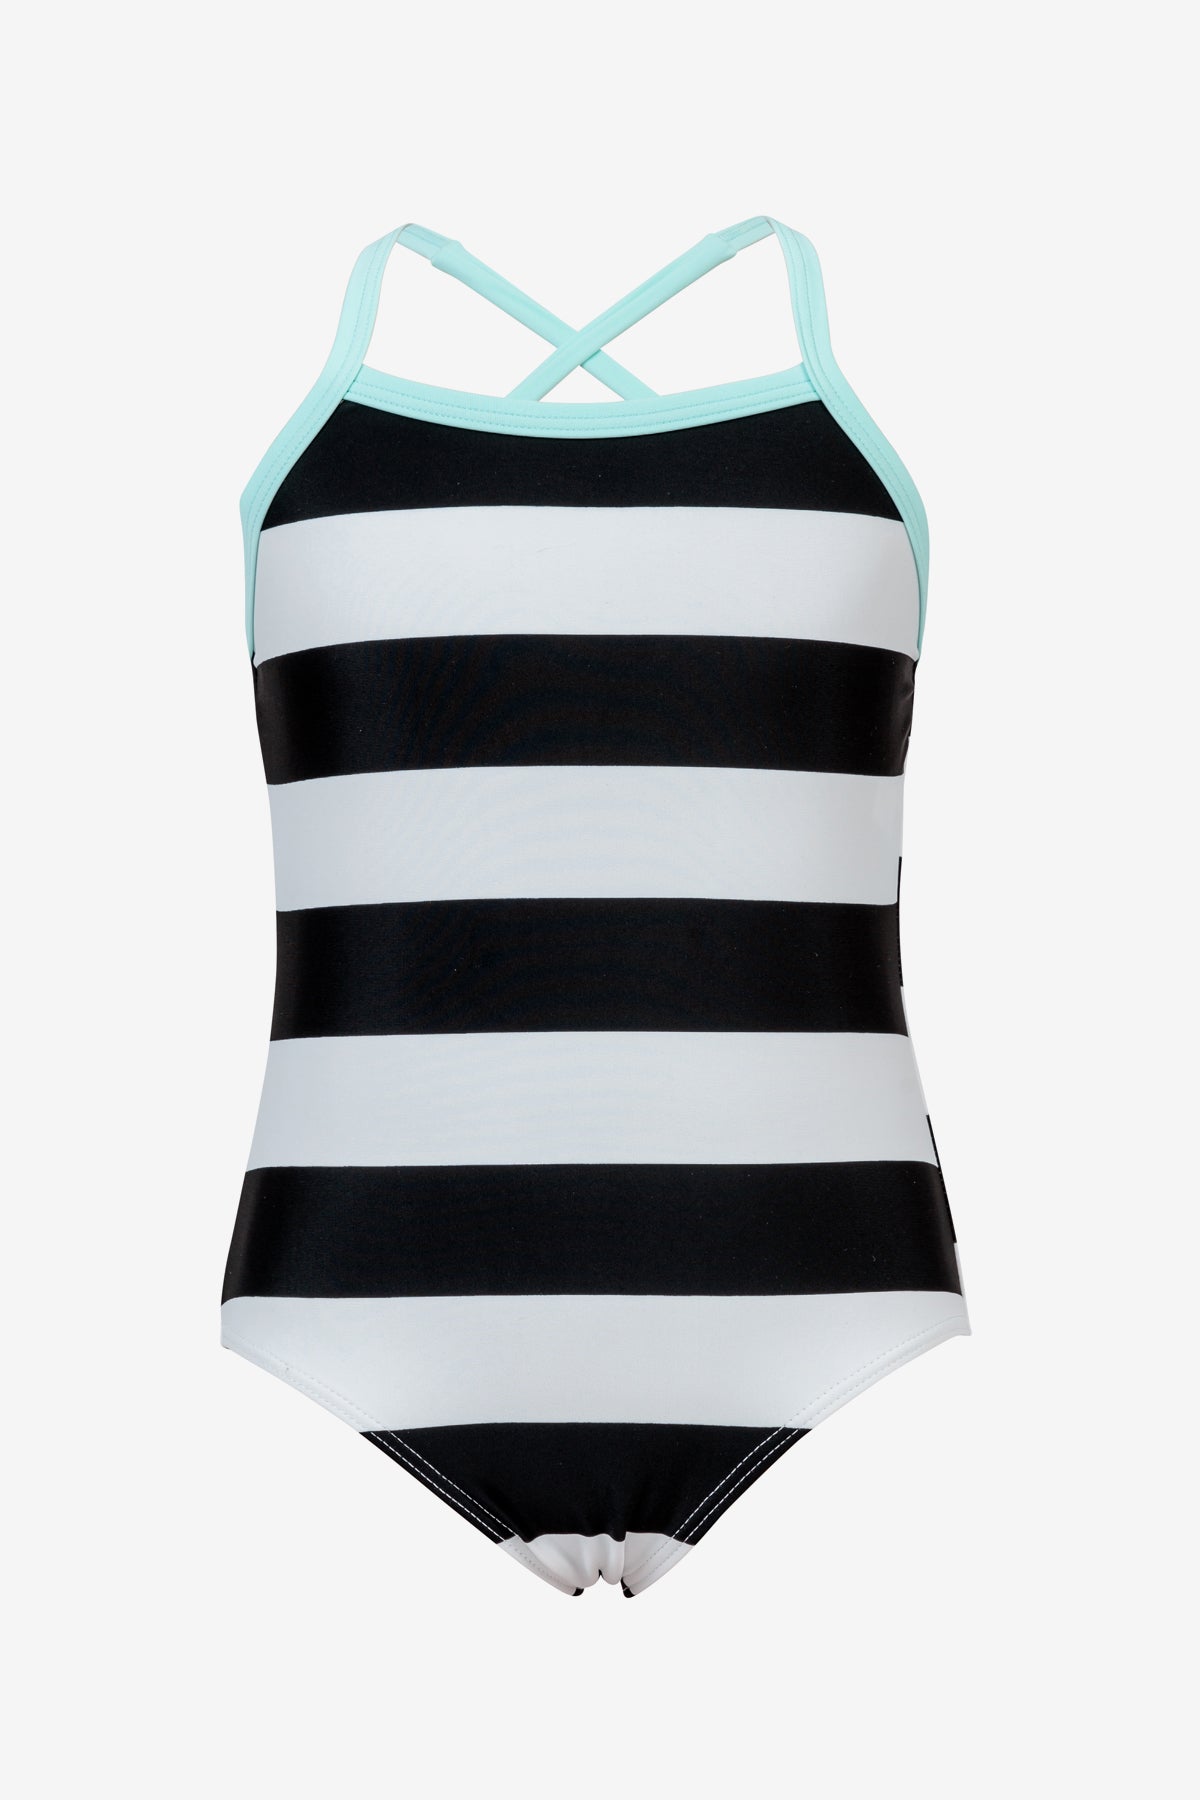 Kids Swimsuit Black White Stripe (Size 4 left) – Mini Ruby